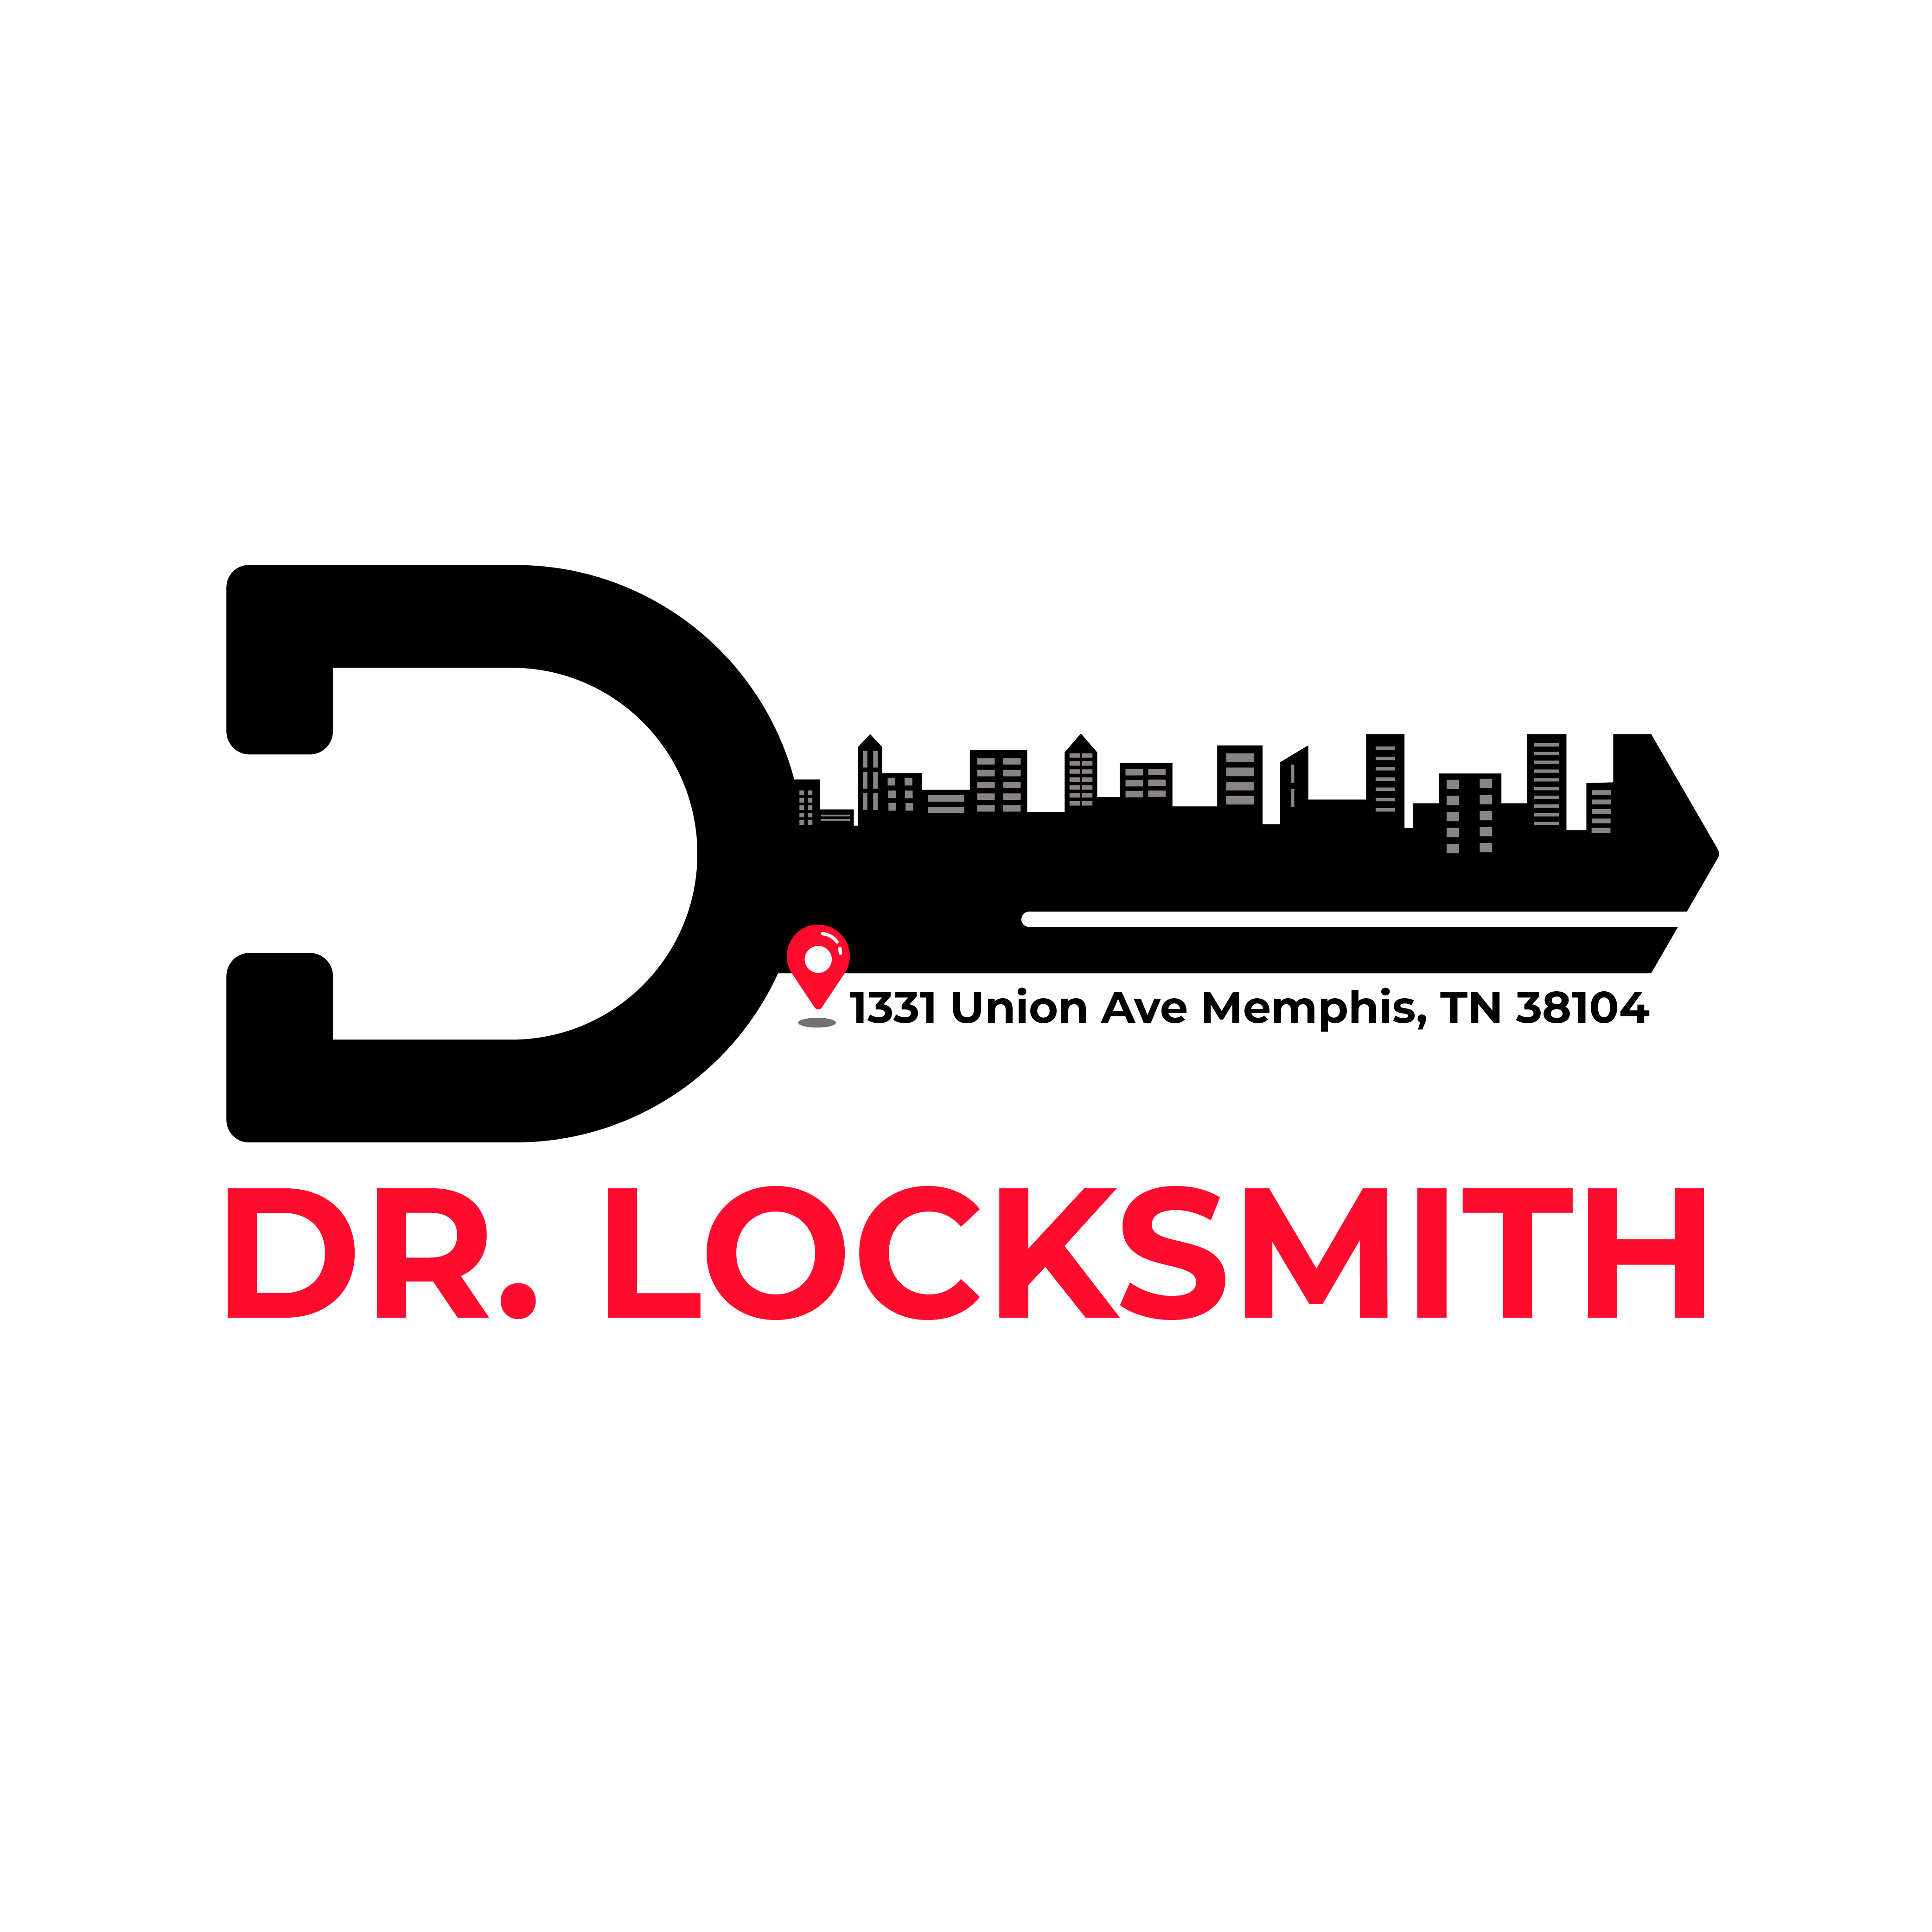 Doctor Locksmith in Memphis